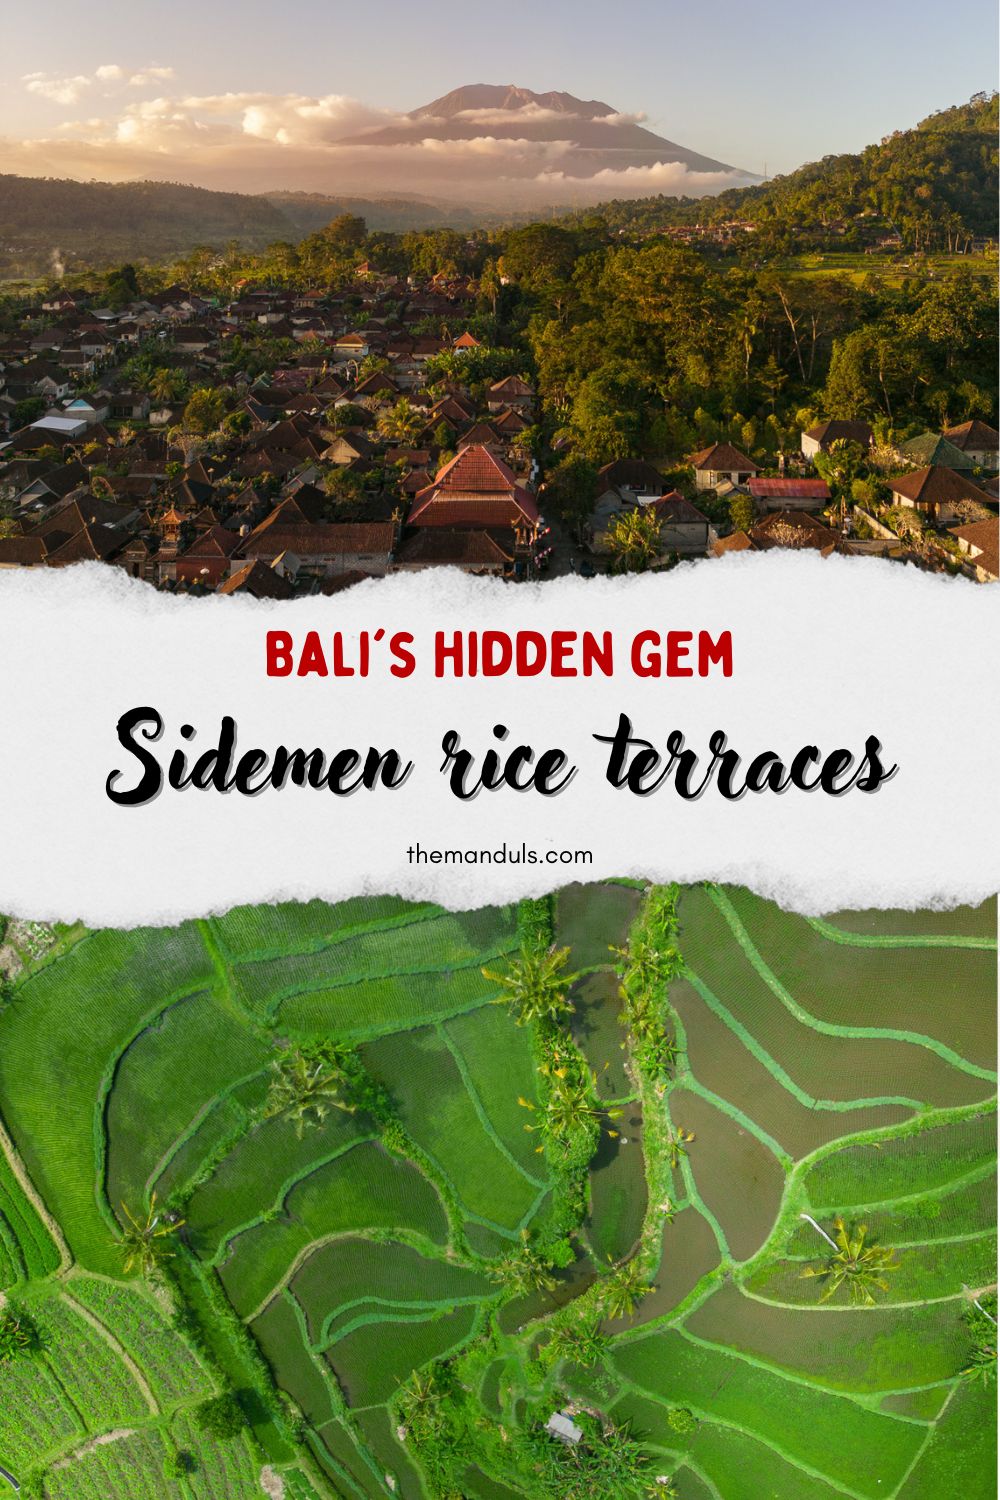 Sidemen rice terraces Bali pinterest